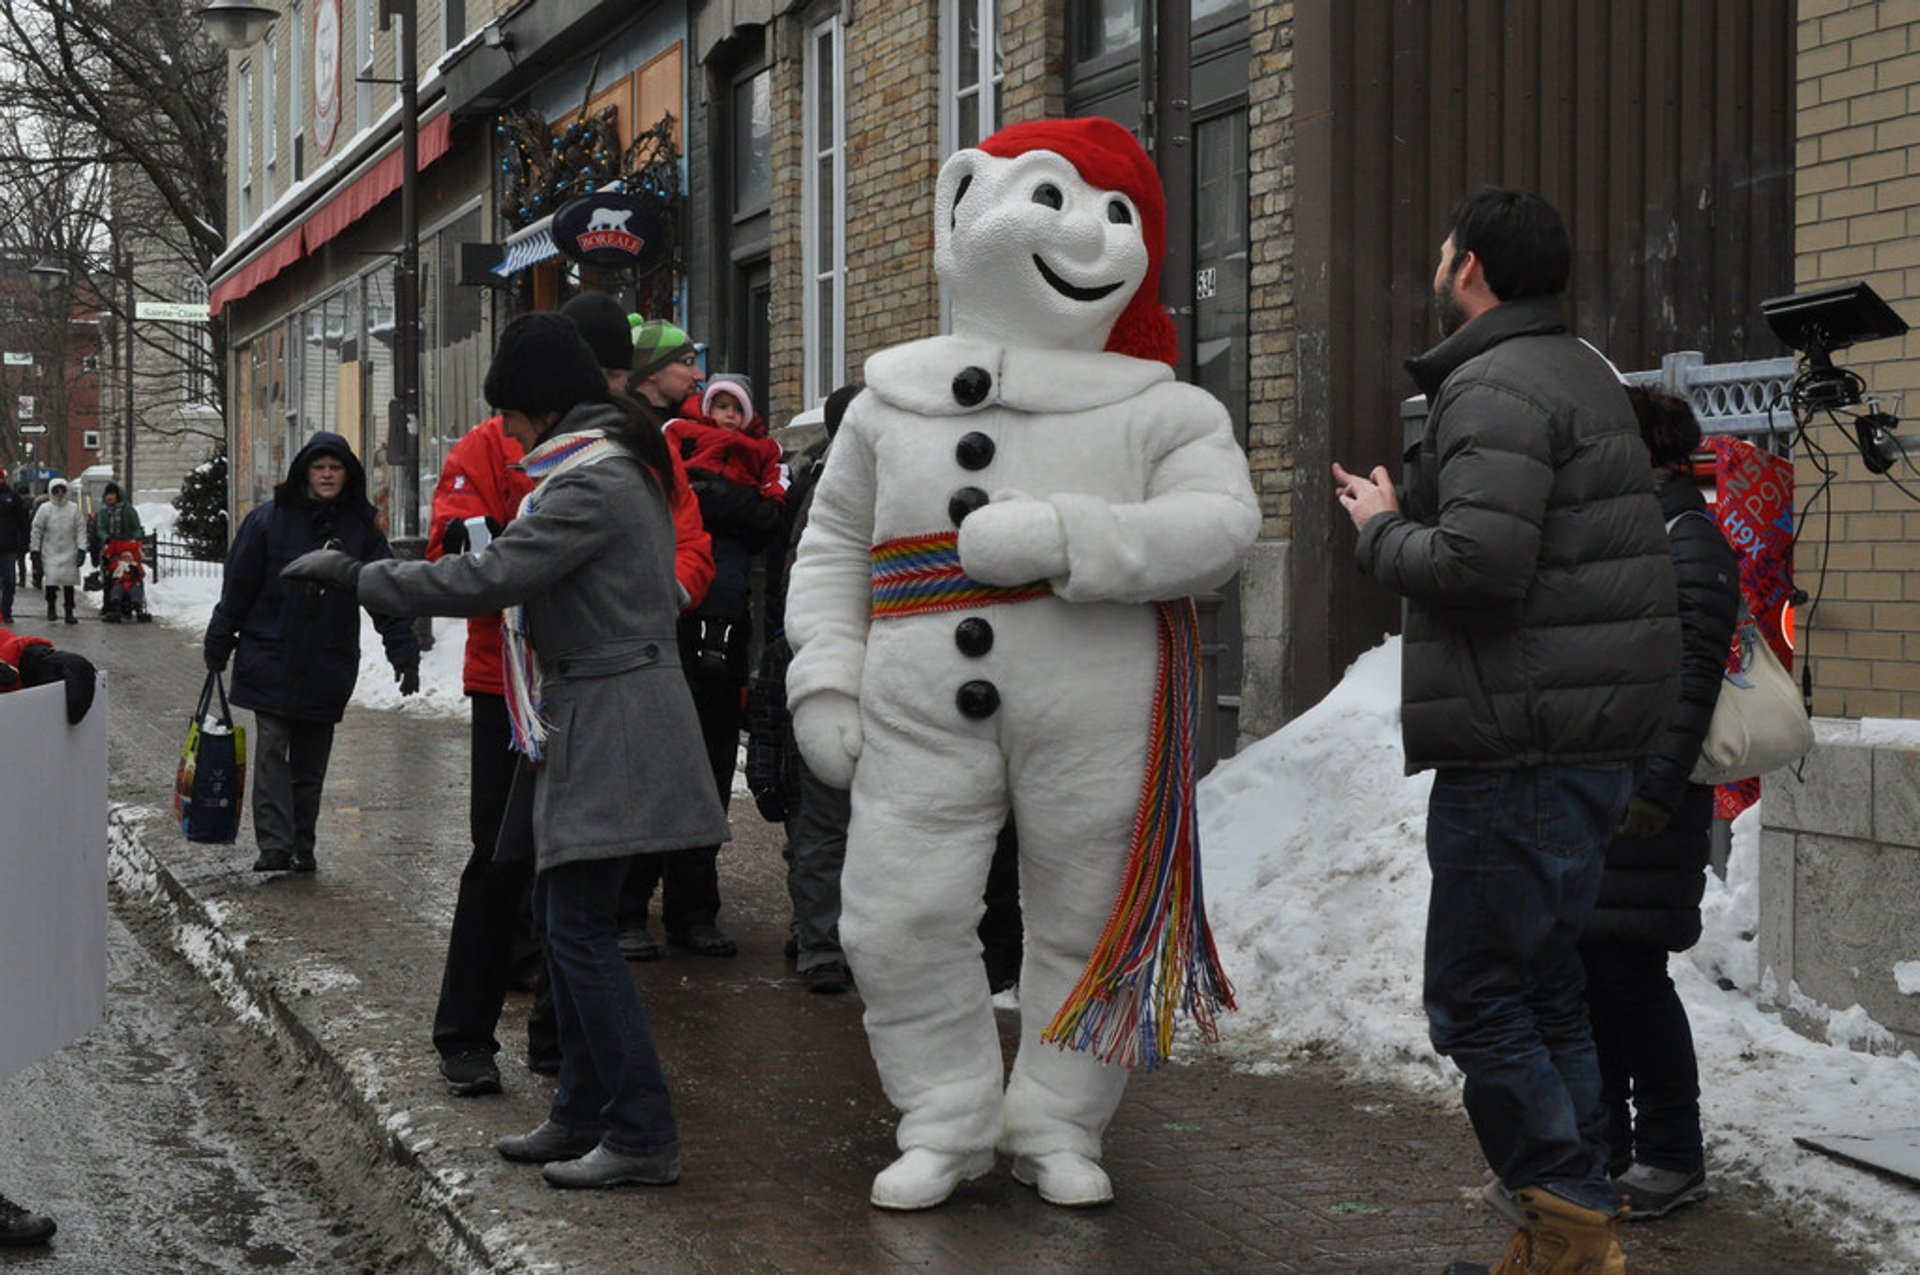 Quebec Winter Carnival (Carnaval de Québec)